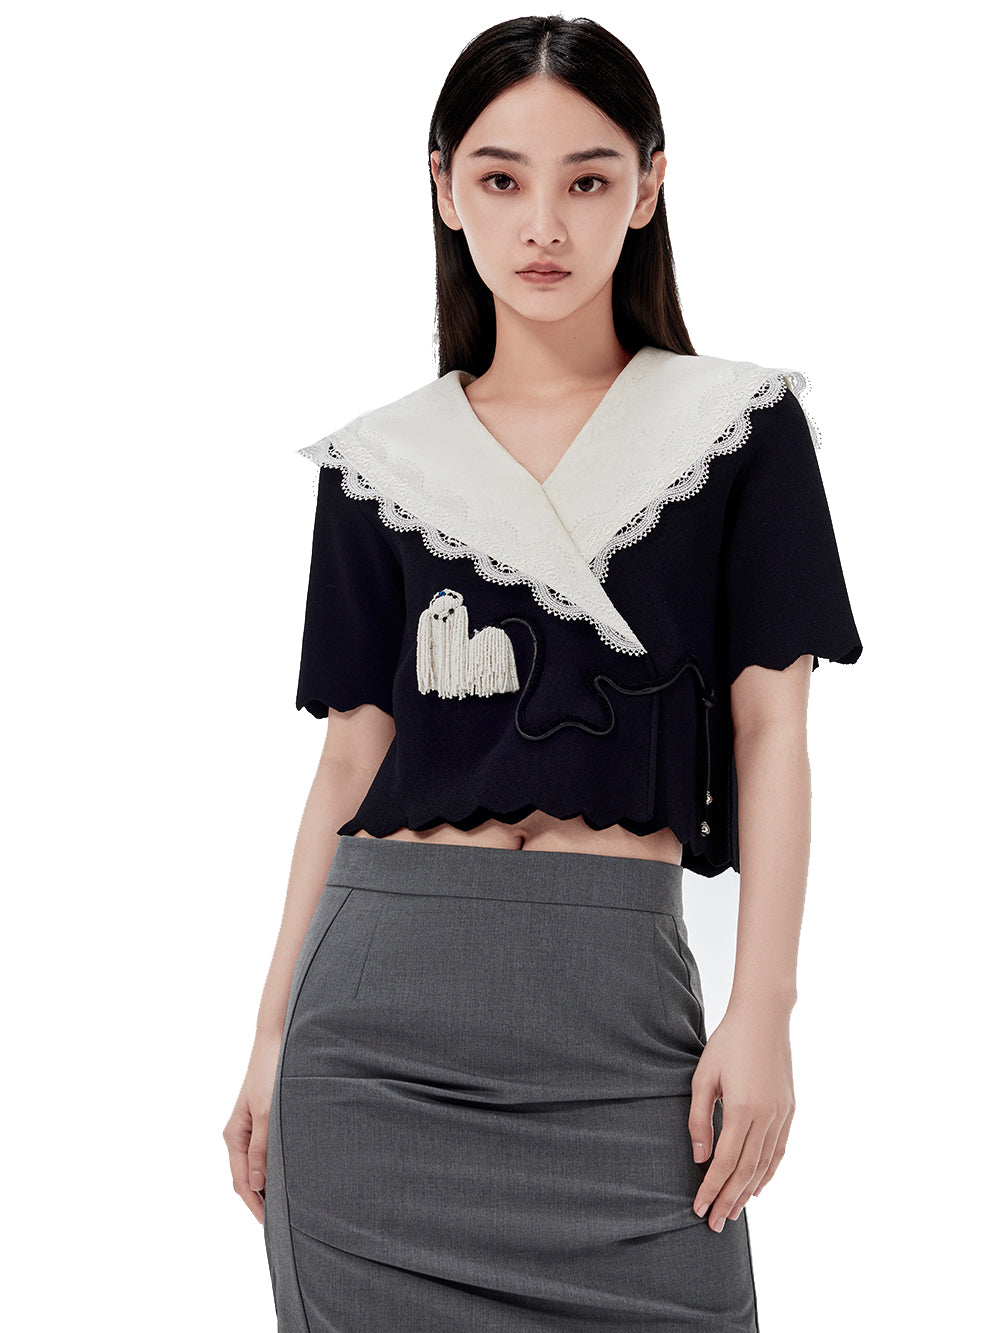 MUKZIN Gray Pleated Midi Skirt